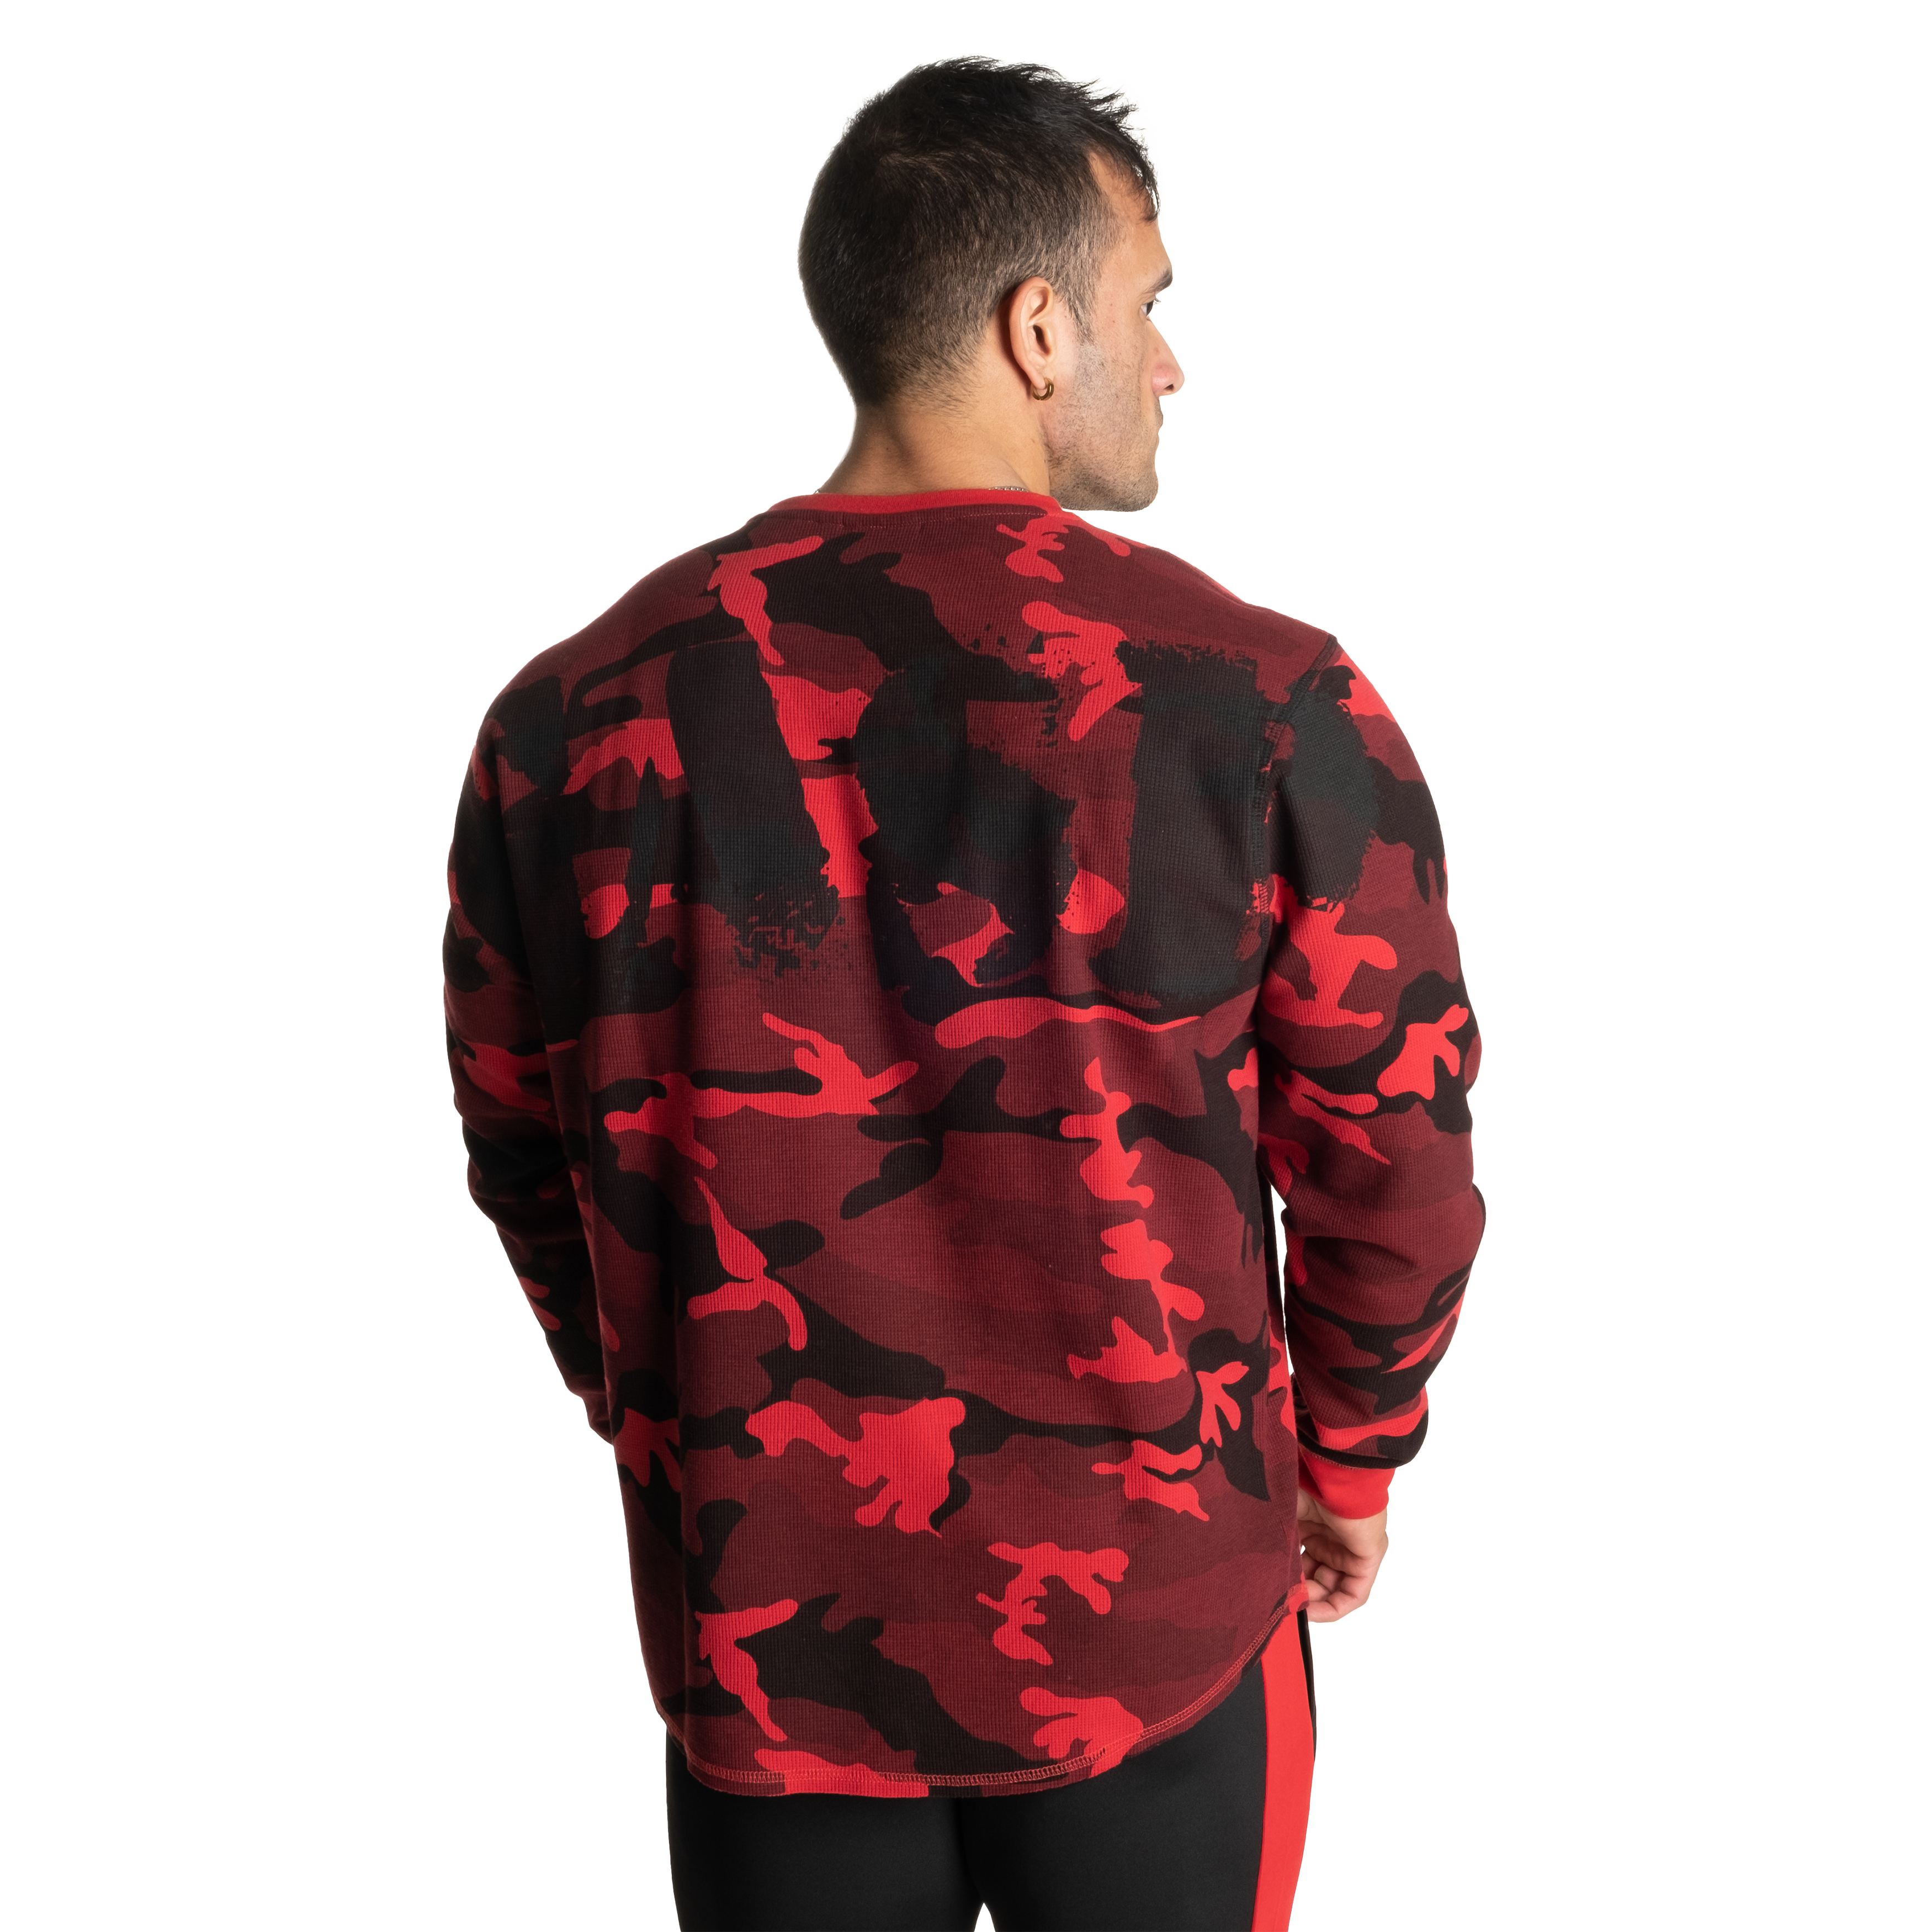 Thermal Logo sweater, Red Camo - MUSL BUDDIES